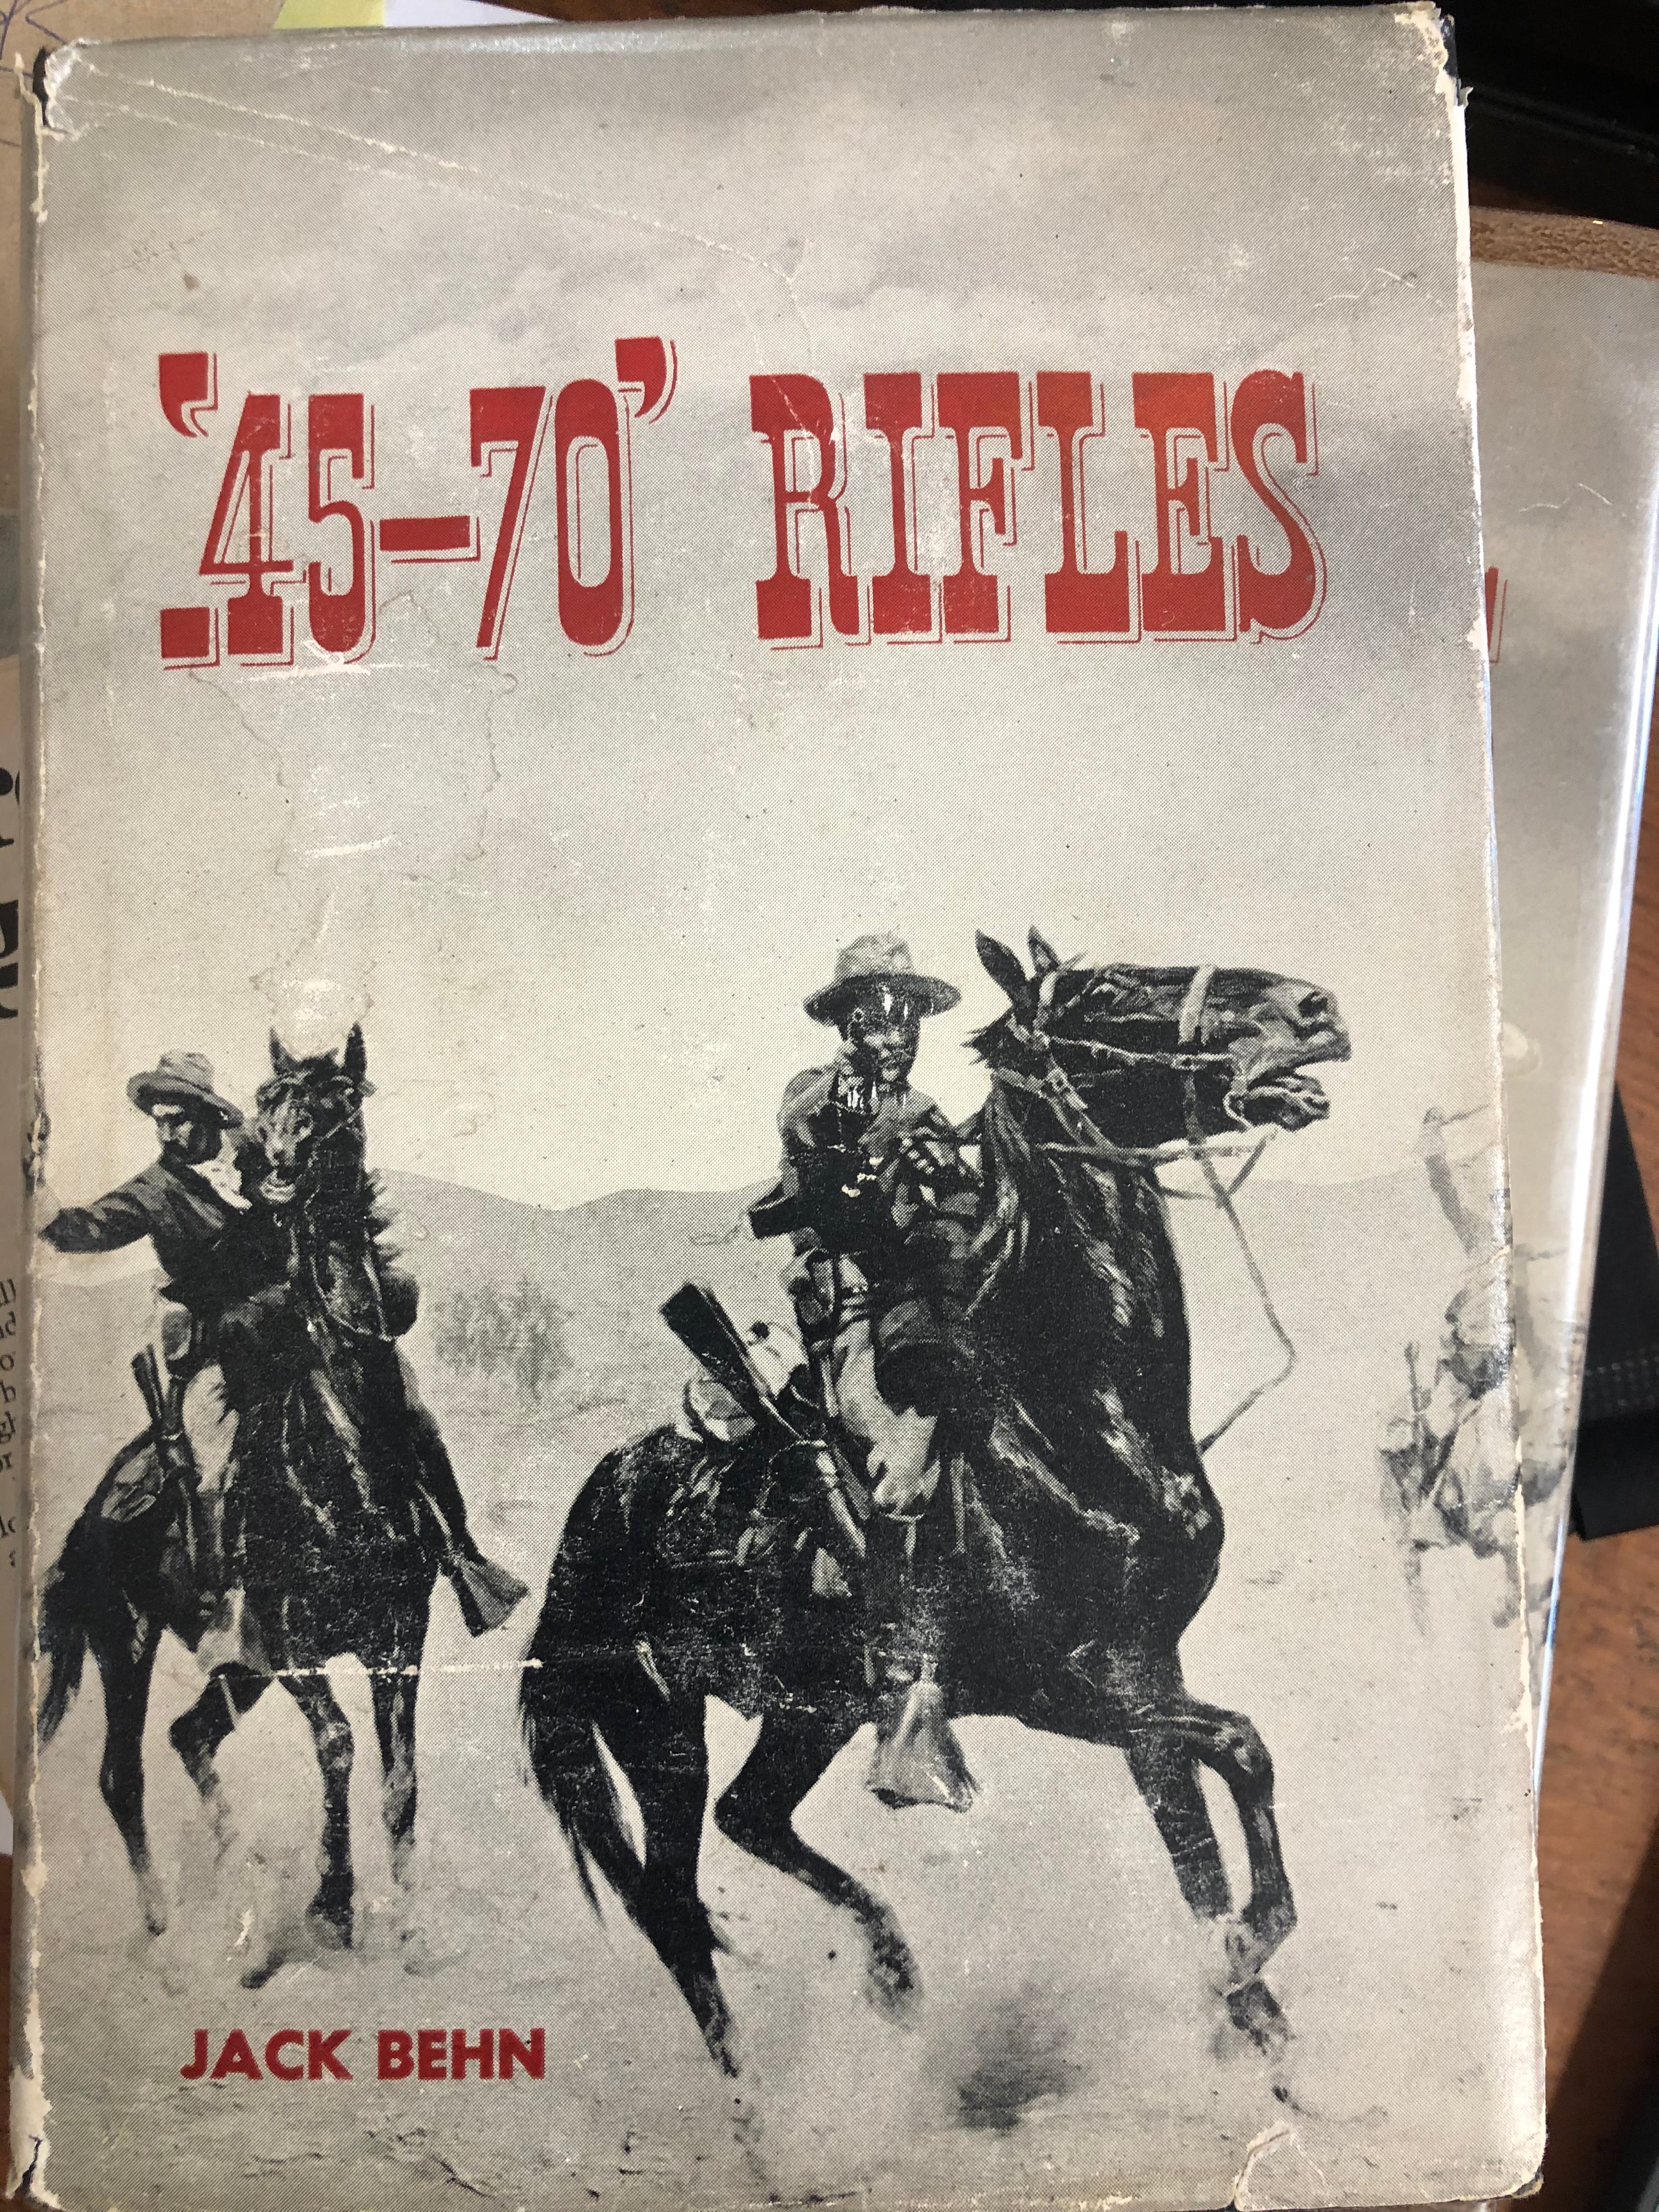 BOOKS - "45-70" Rifles - guns and ammunition